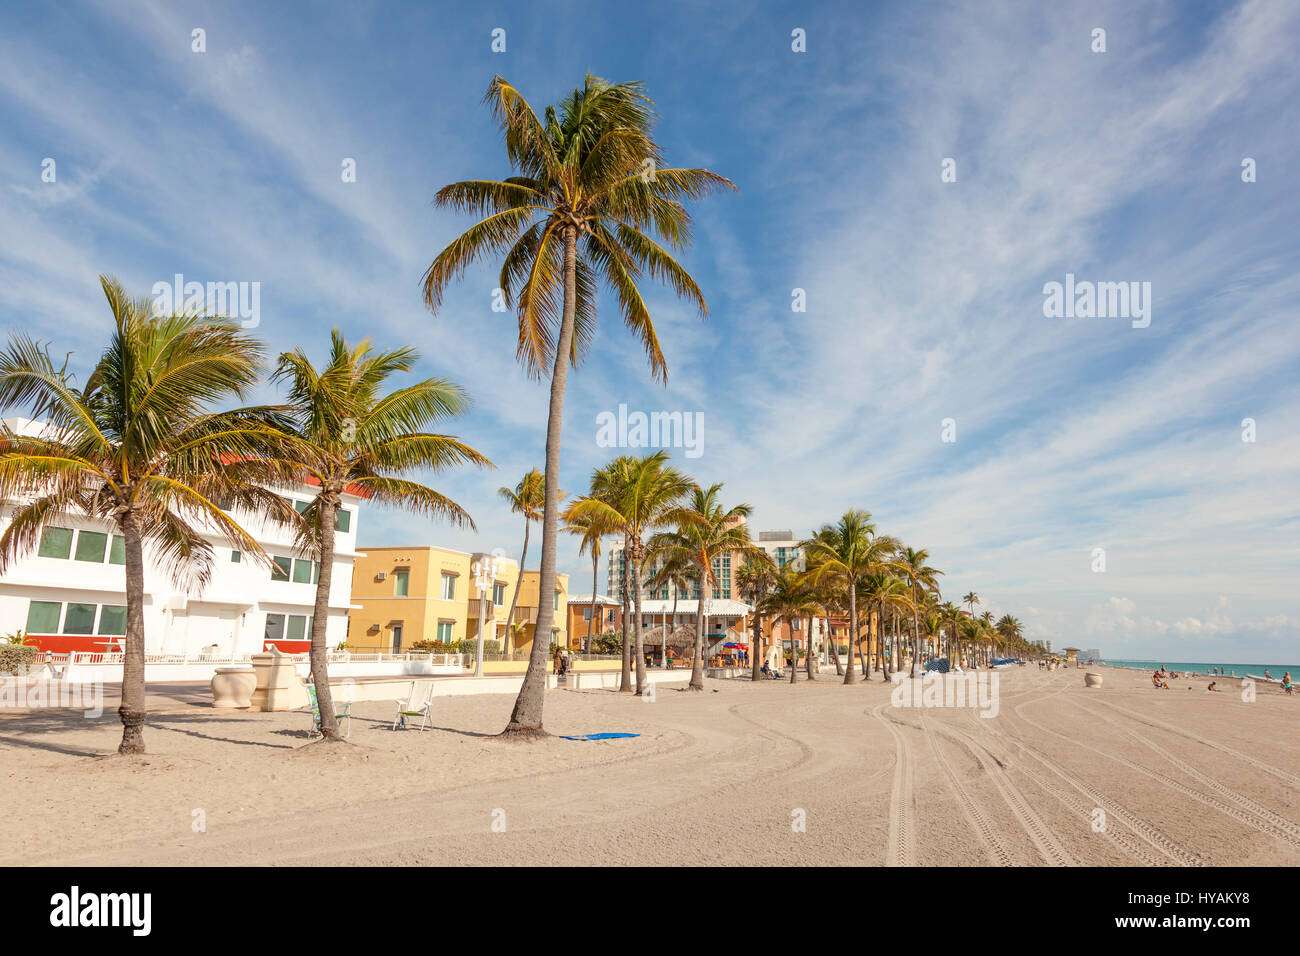 Hollywood Beach, Fl, USA - 13. März 2017: Hollywood Beach breiten Walk an einem sonnigen Tag im März. Florida, United States Stockfoto